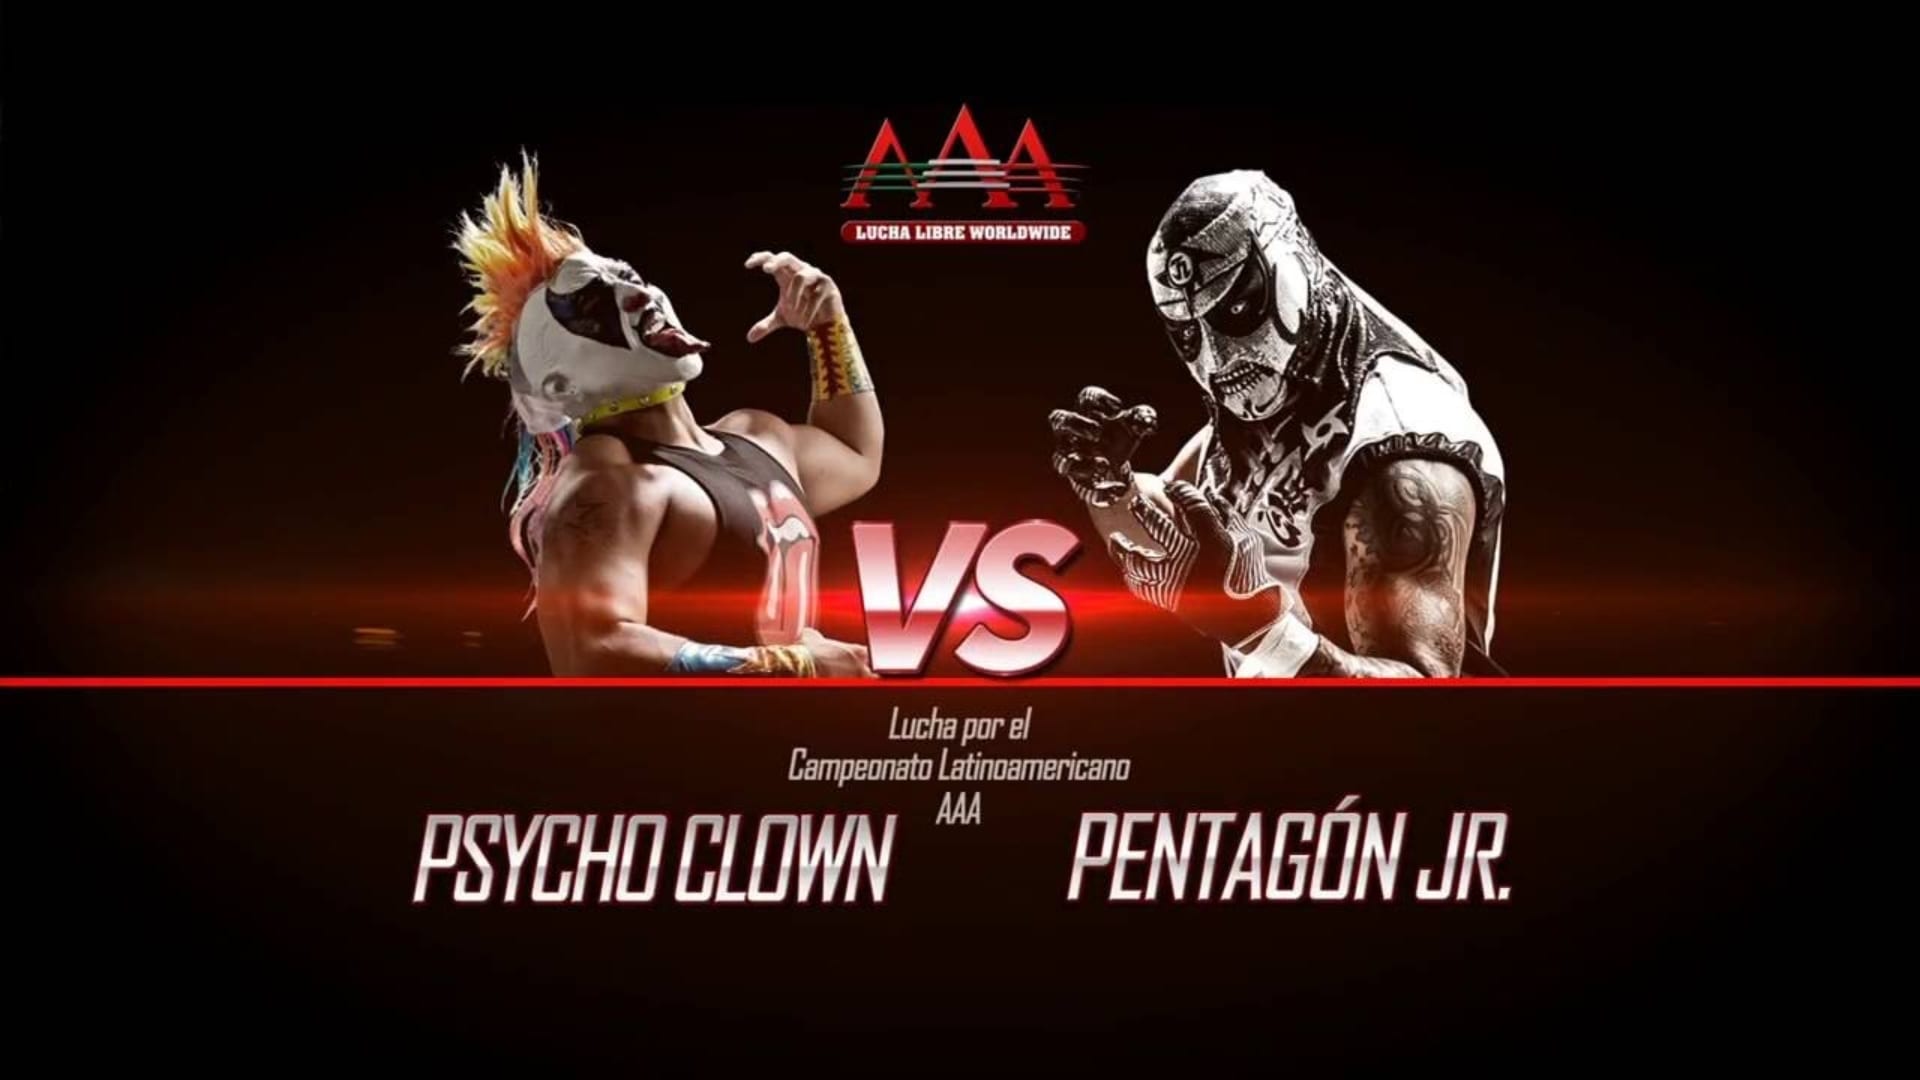 Match of the Day: Pentagon Jr. Vs. Psycho Clown (2016)